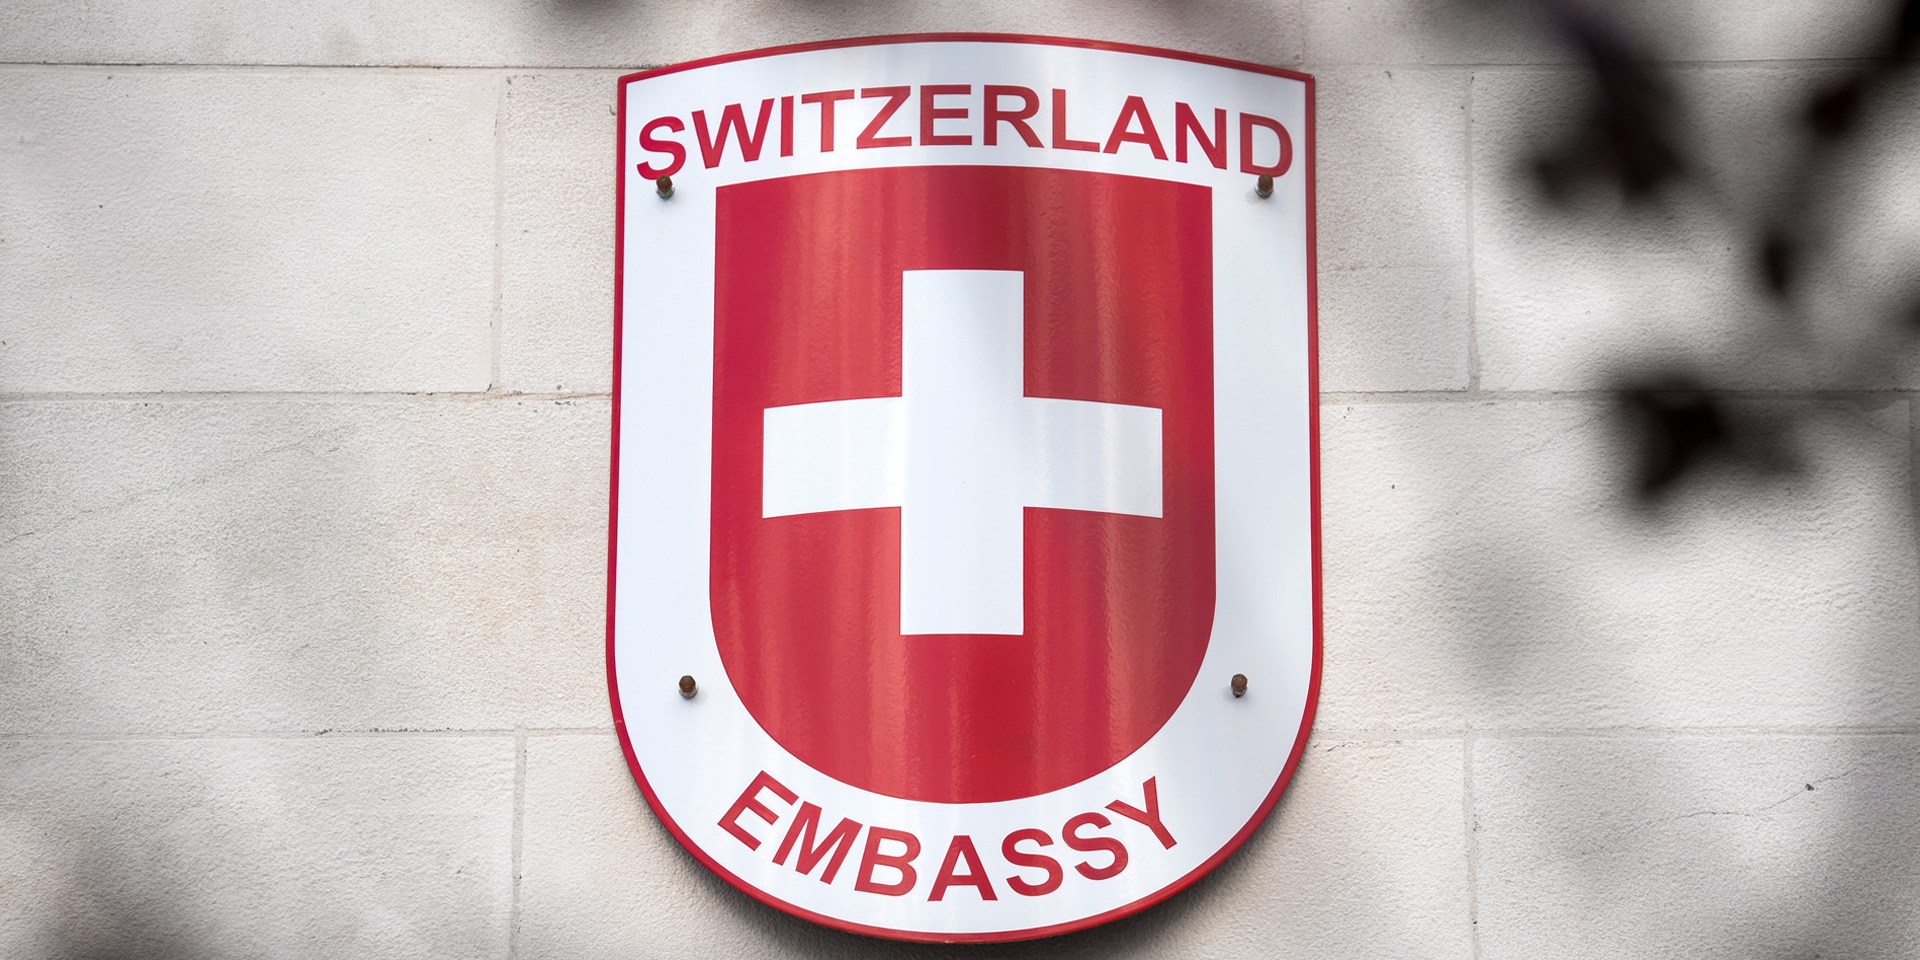 Sign that reads "Switzerland Embassy".